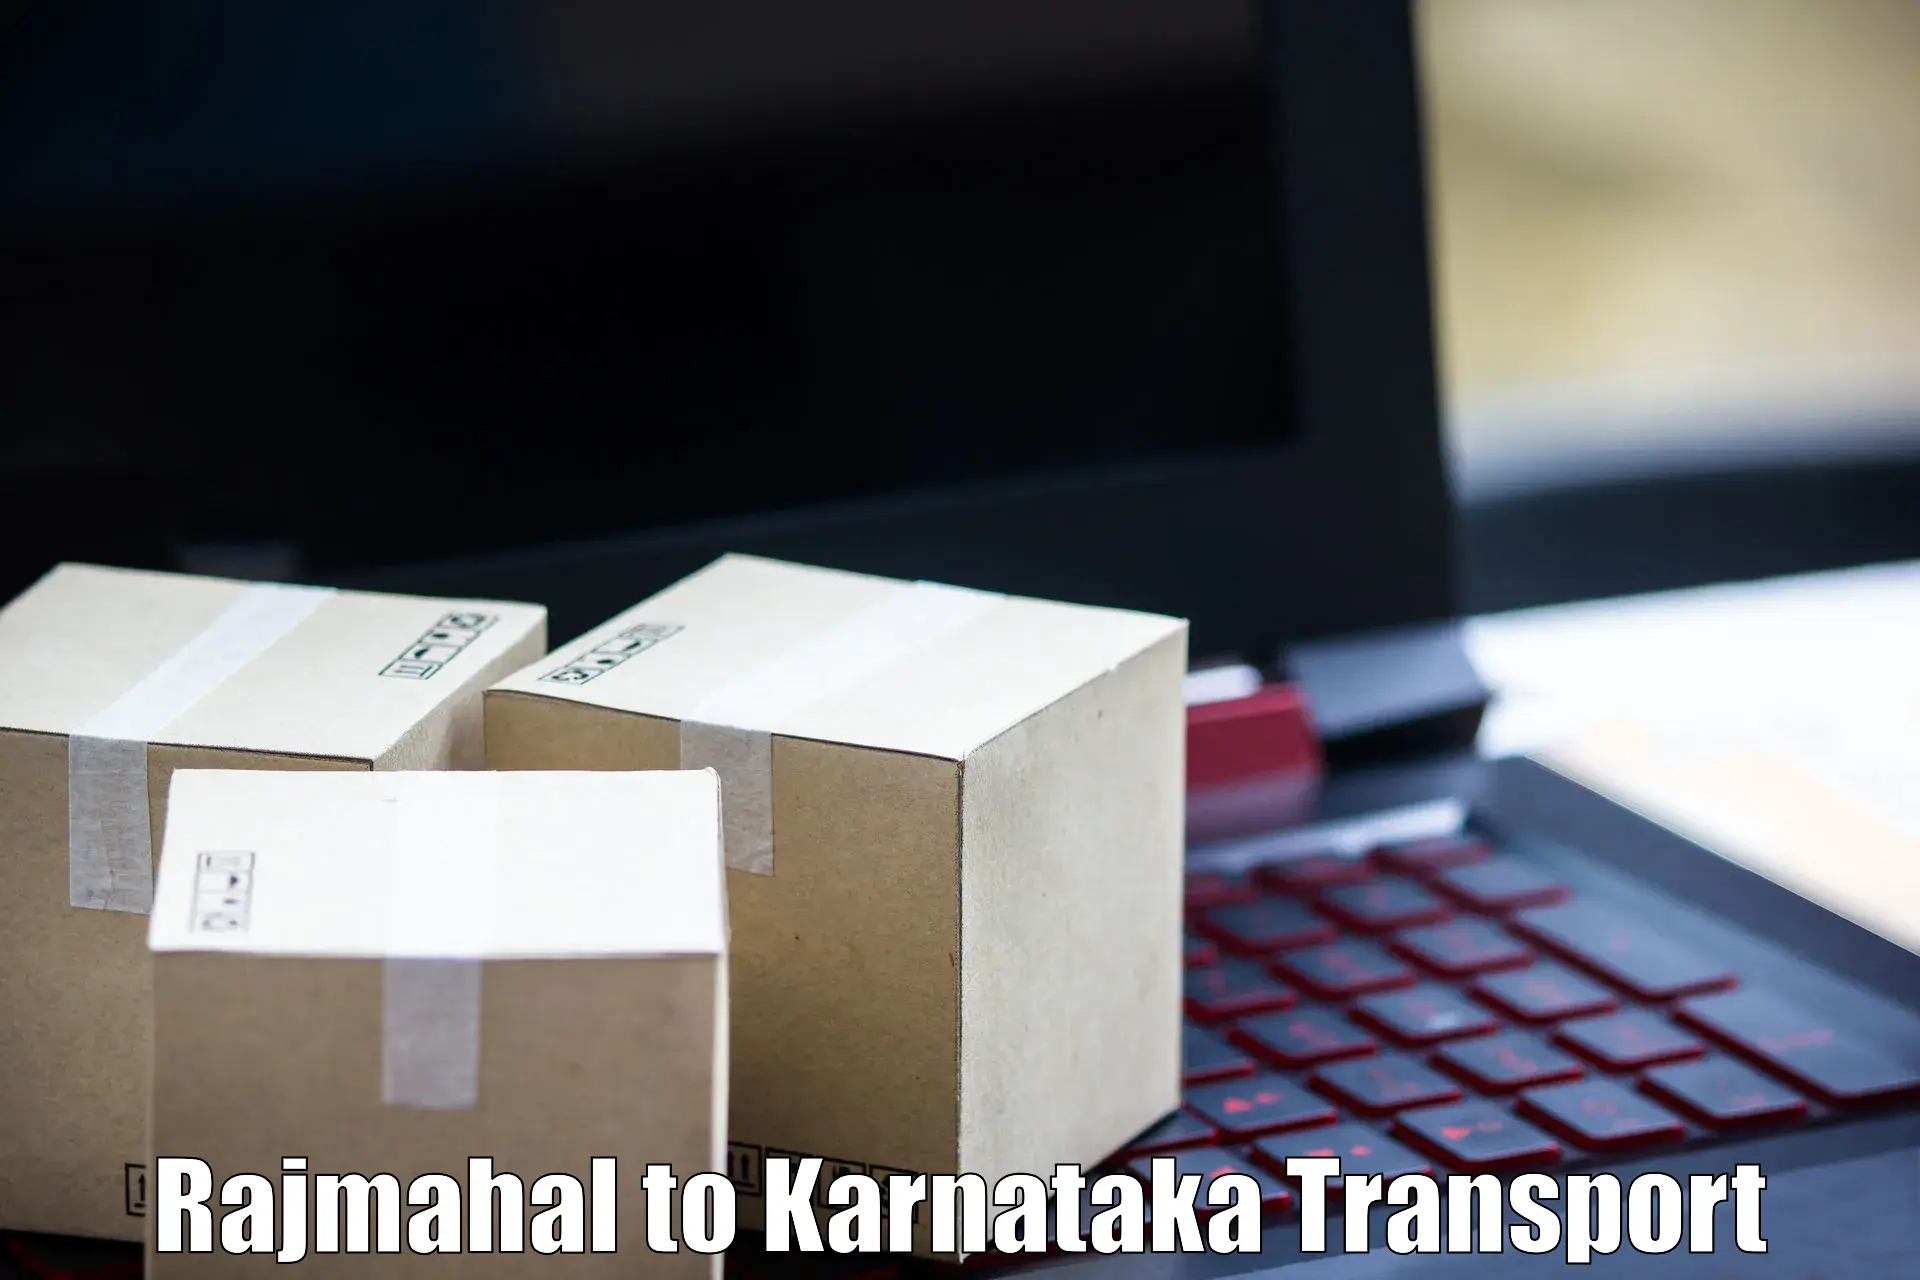 Transport shared services in Rajmahal to Karnataka